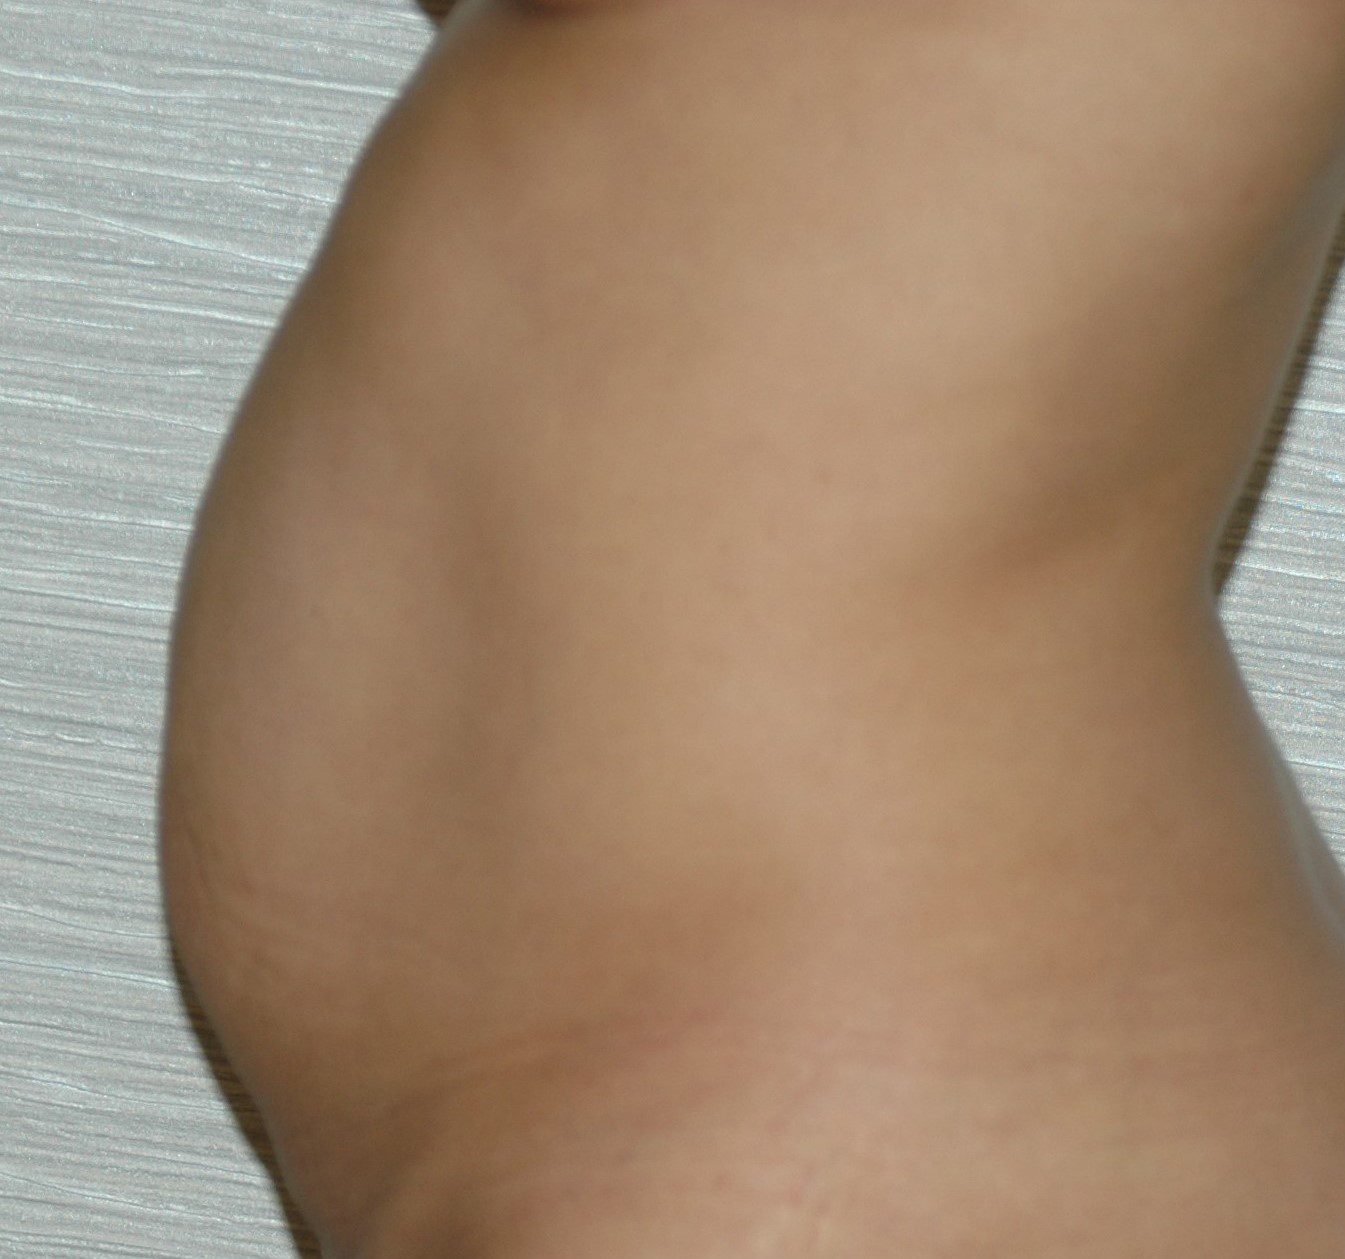 Tummy Tuck Surgery or Abdominoplasty in dubai